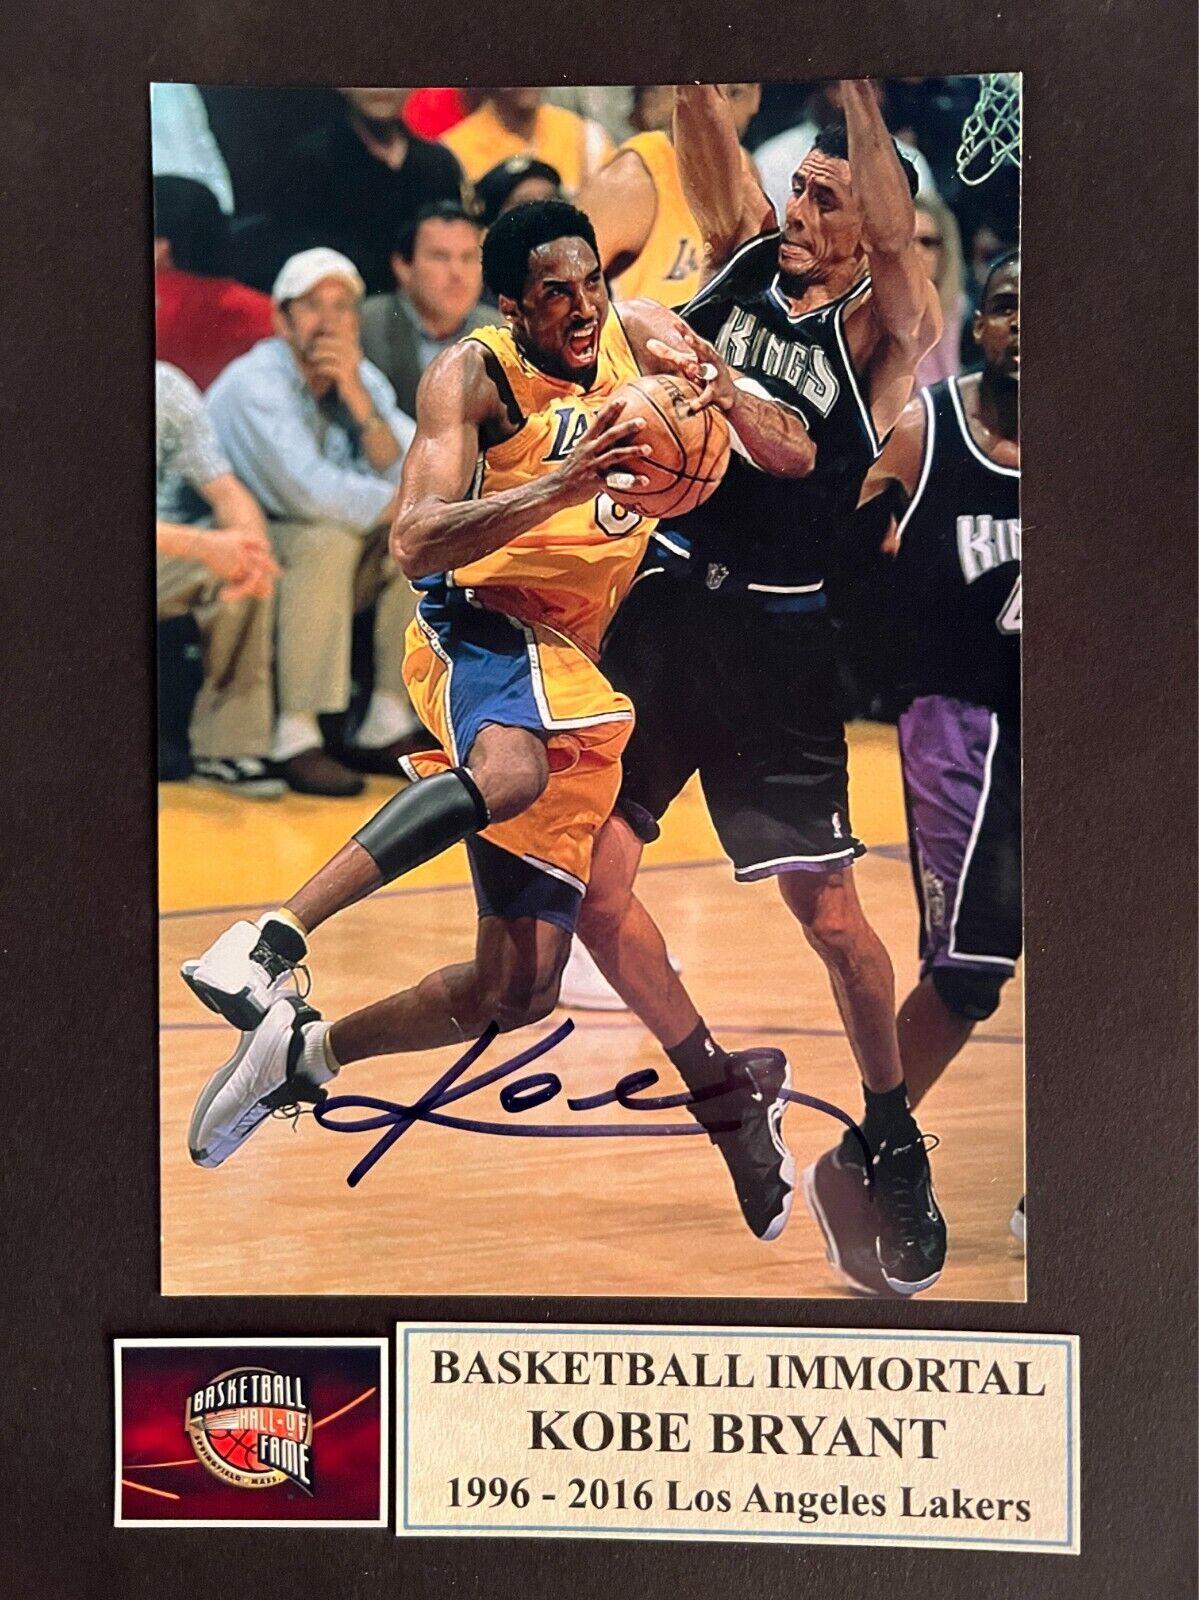 LA Lakers Kobe Bryant signed photo. 8x10 inches